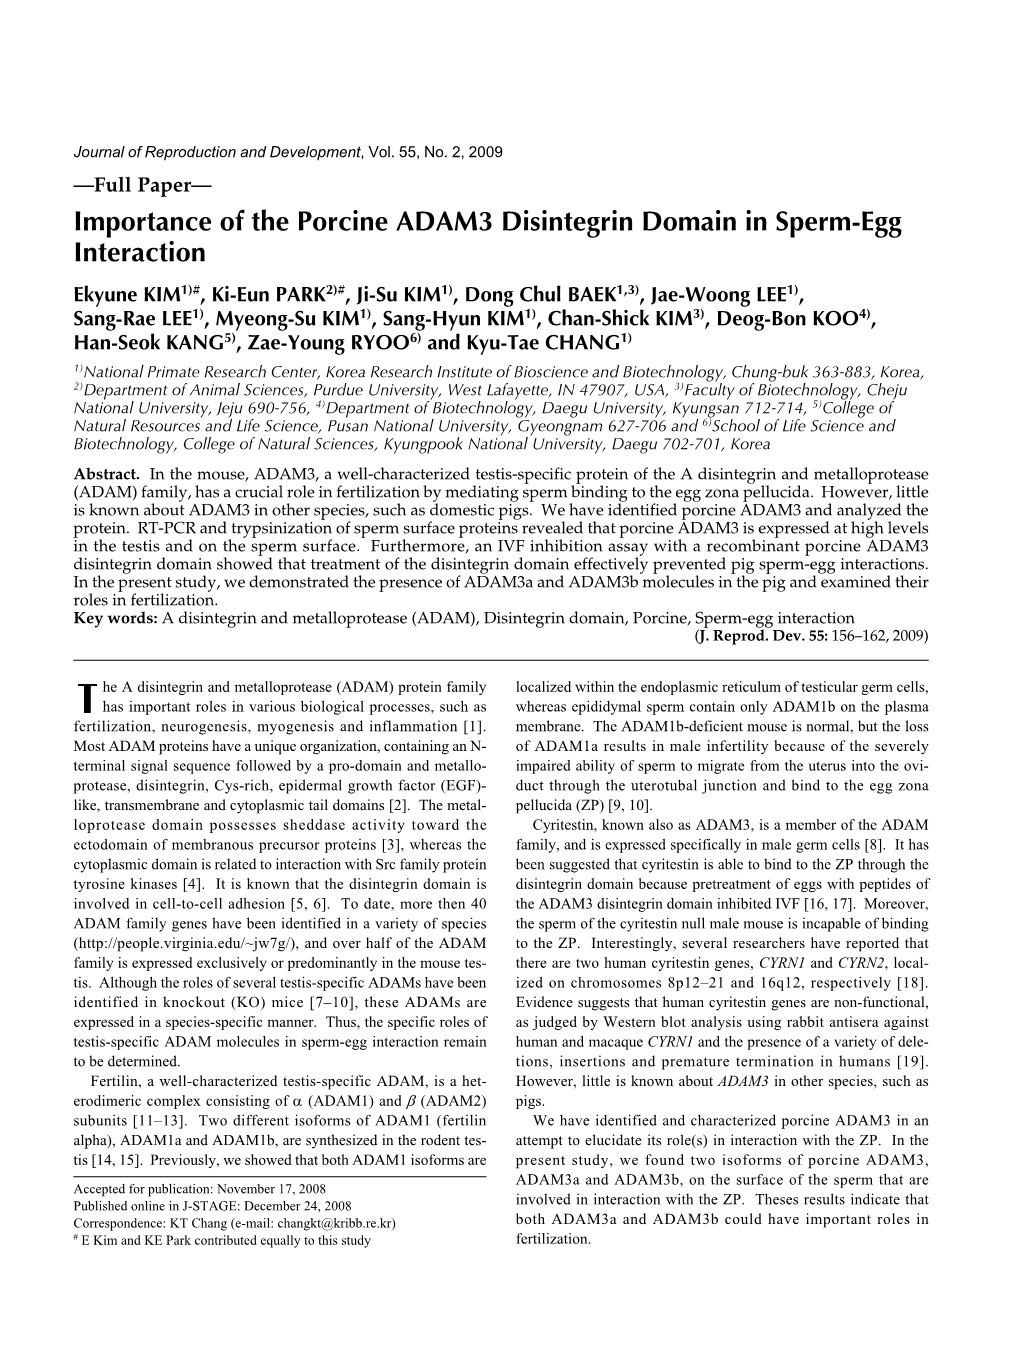 Importance of the Porcine ADAM3 Disintegrin Domain in Sperm-Egg